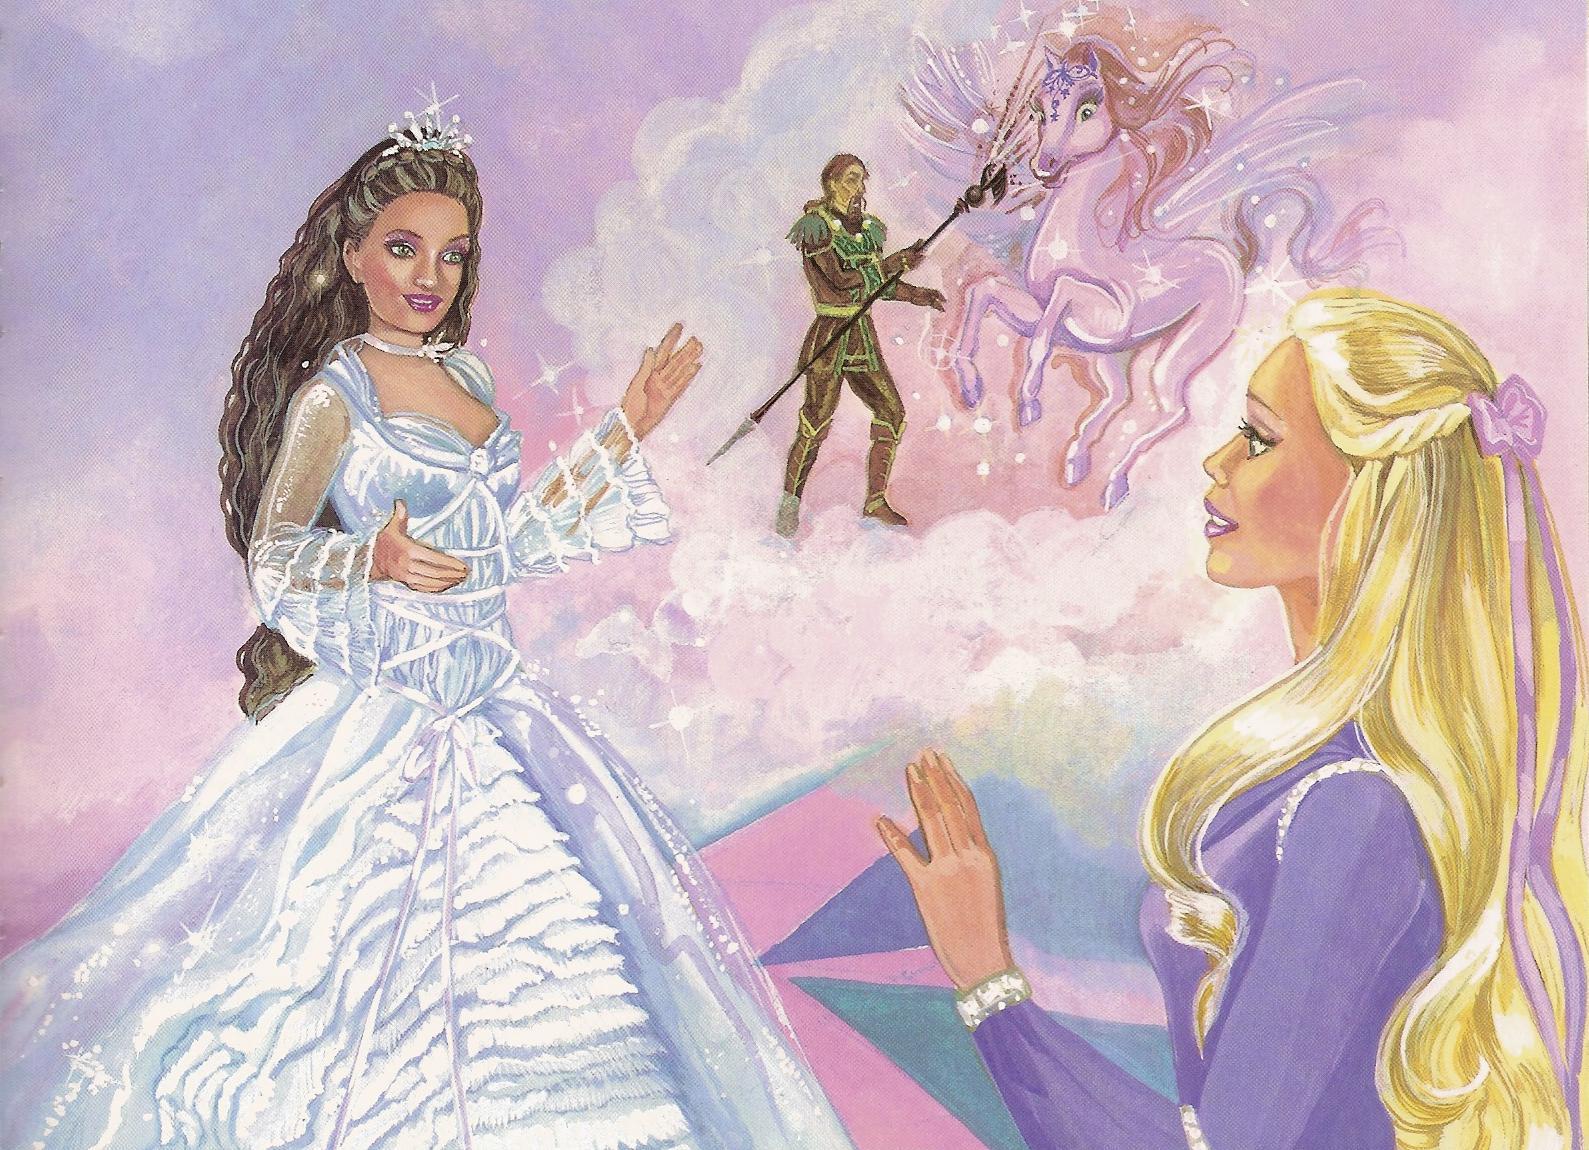 download barbie and the magic of pegasus pc game